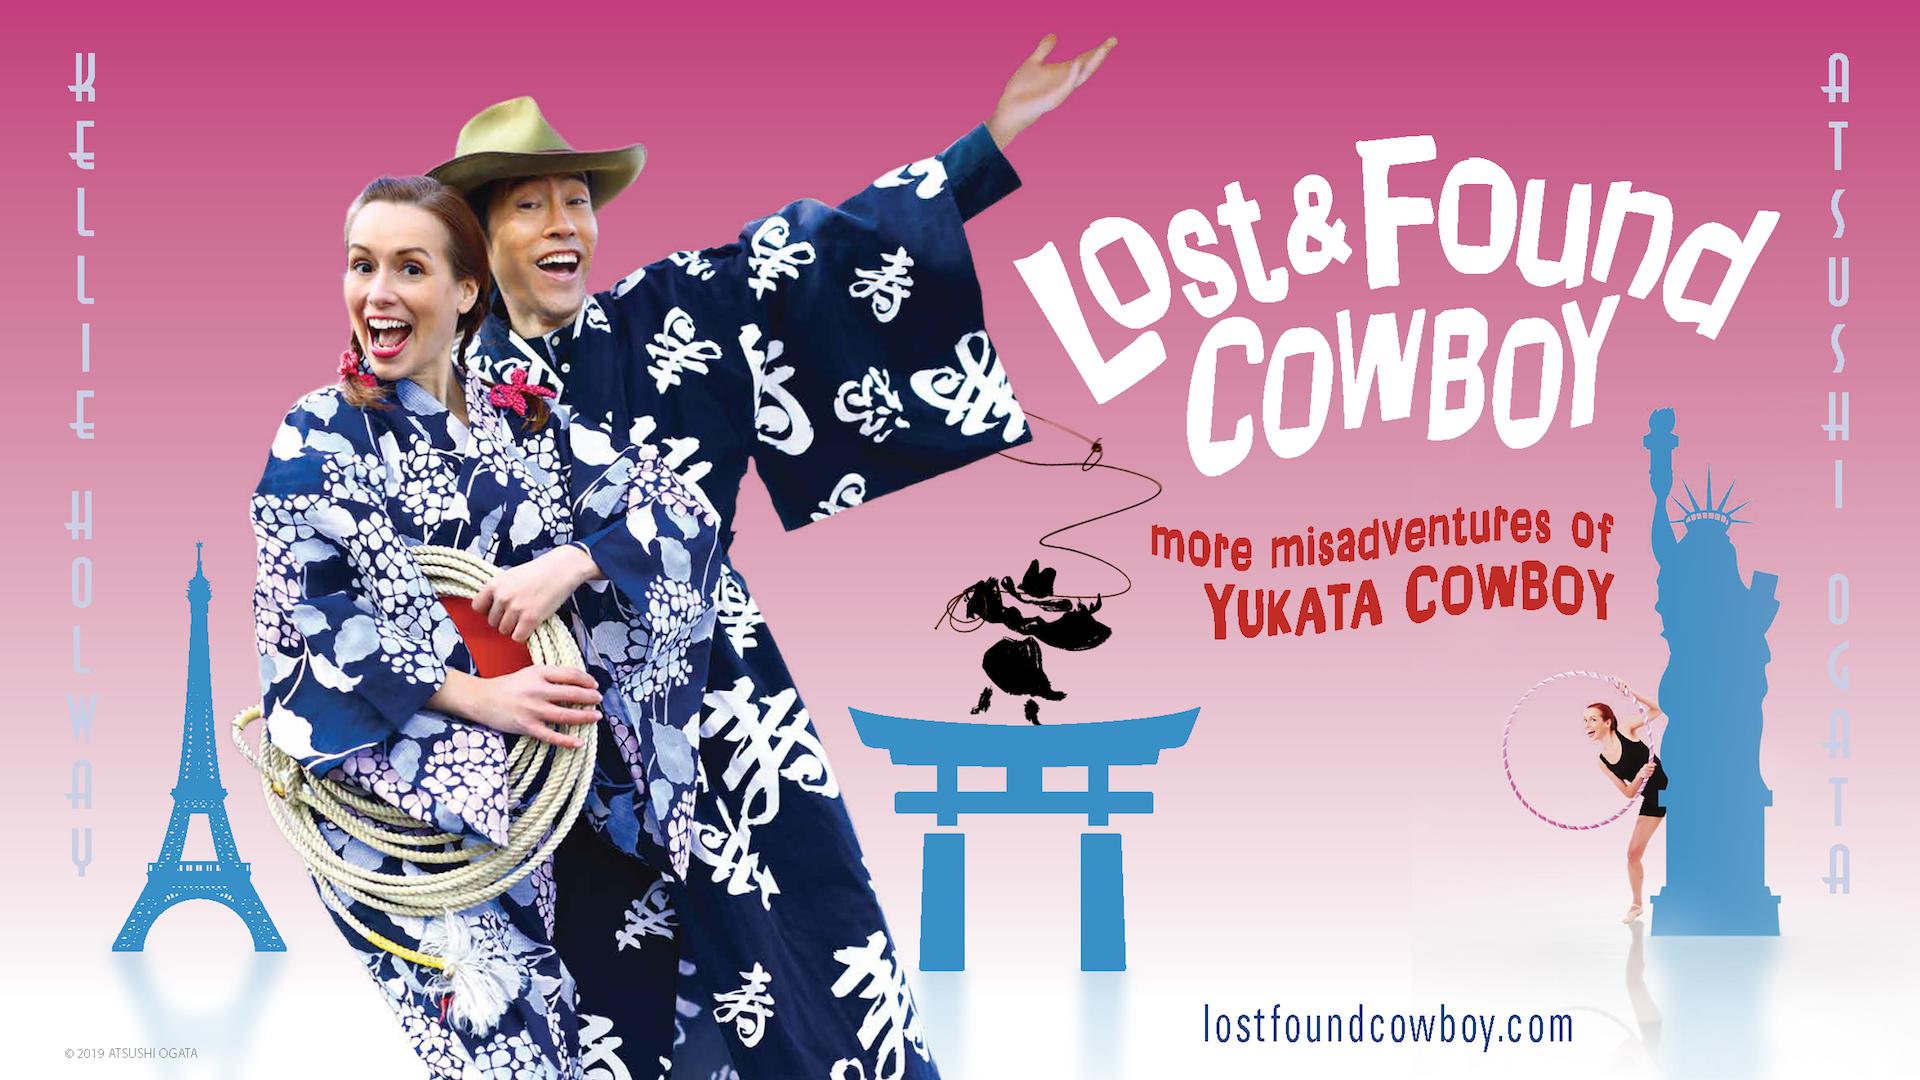 Lost & Found Cowboy